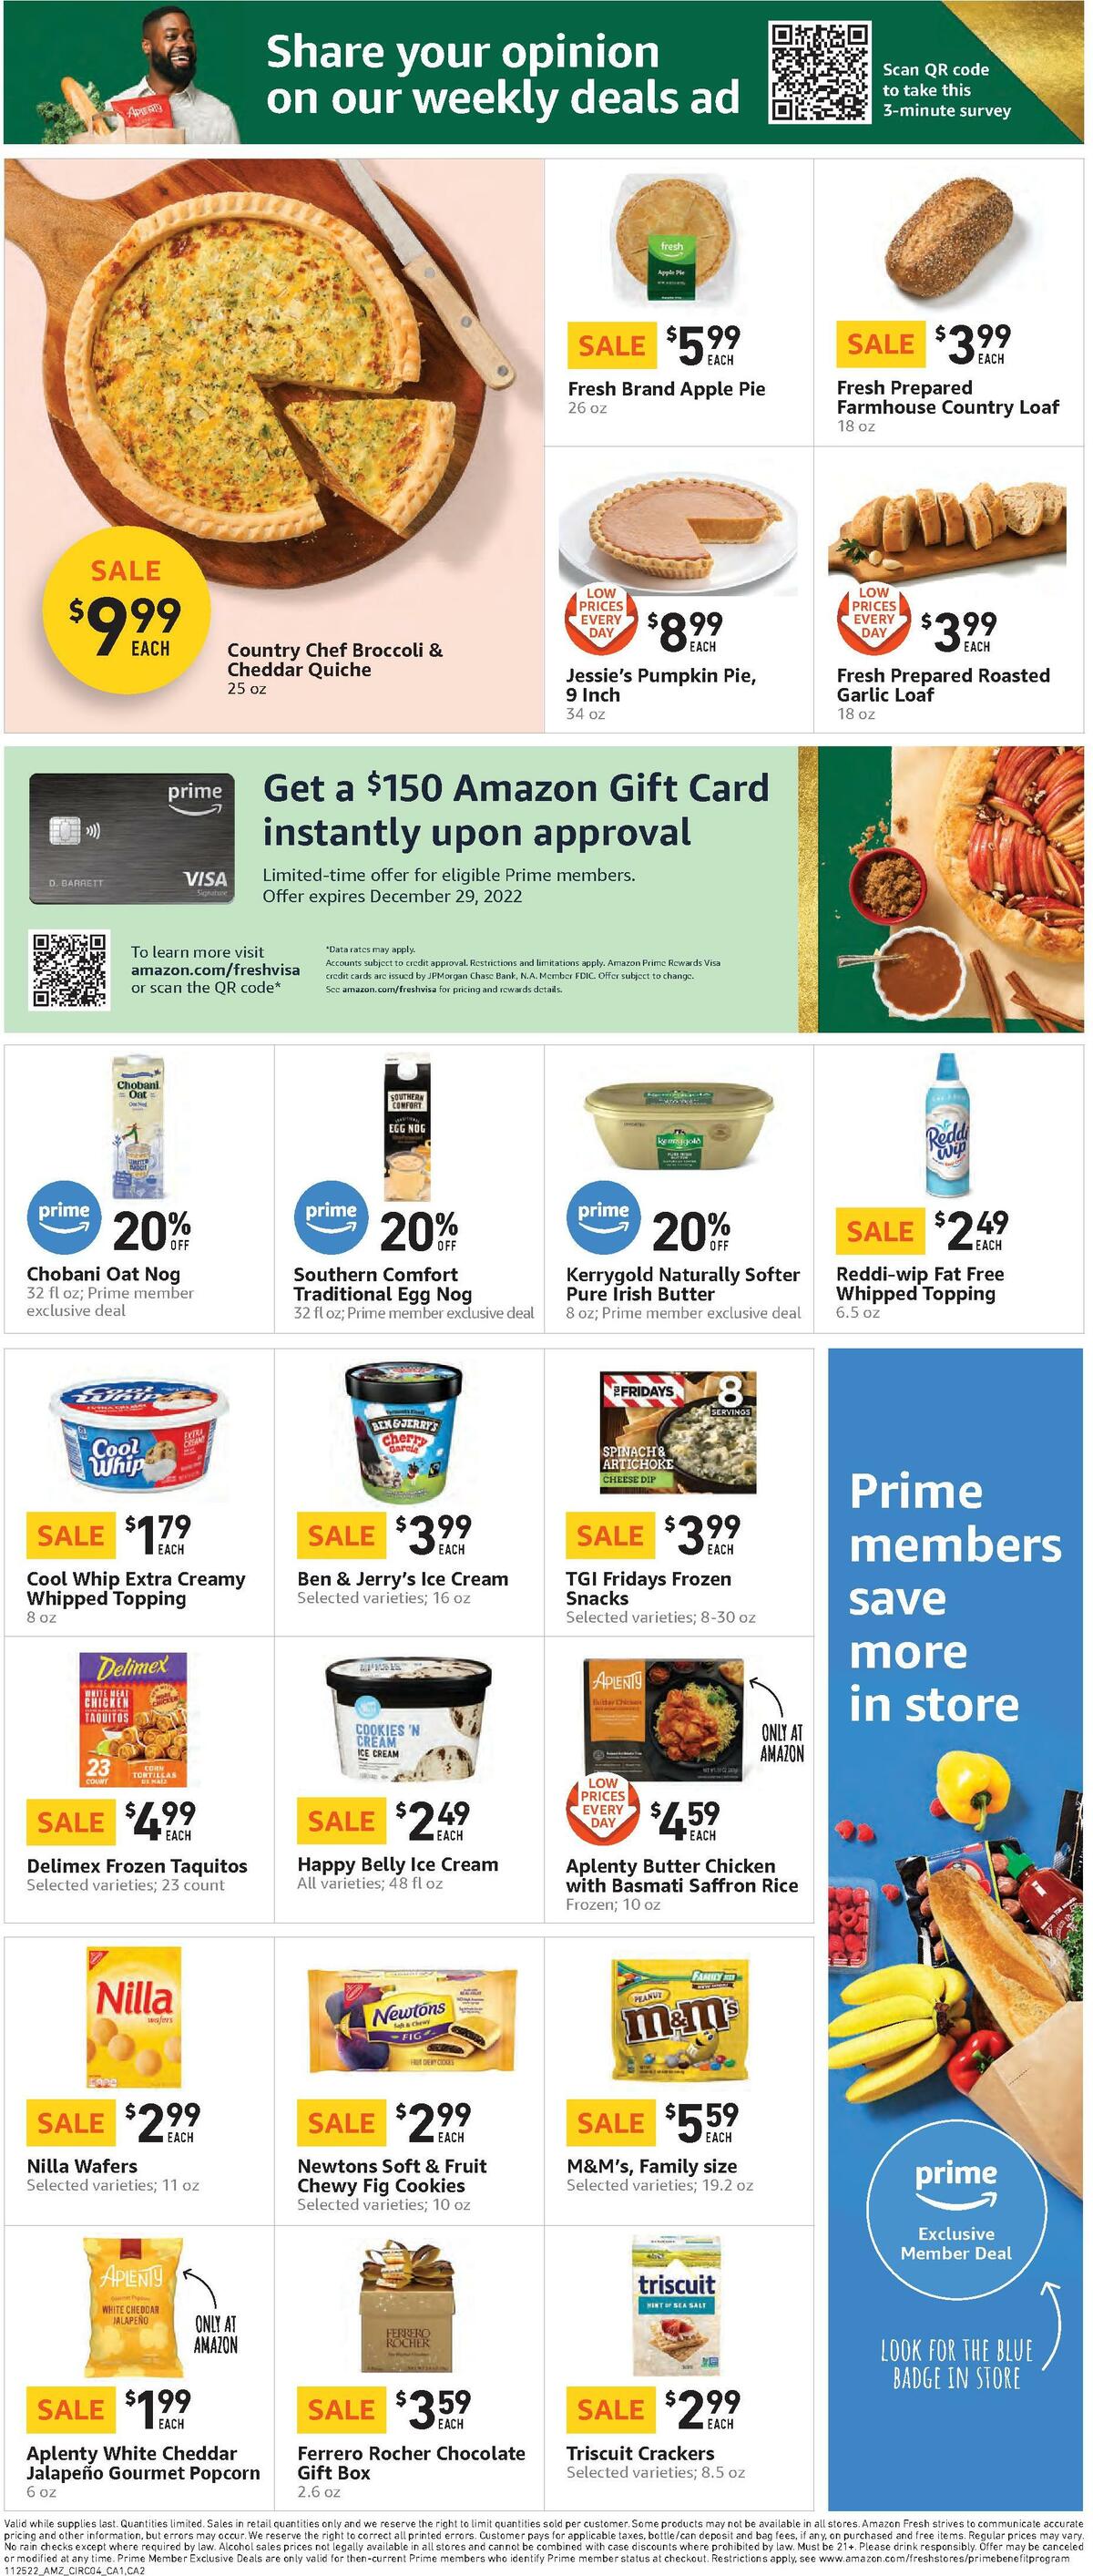 Amazon Fresh Weekly Ad from November 25